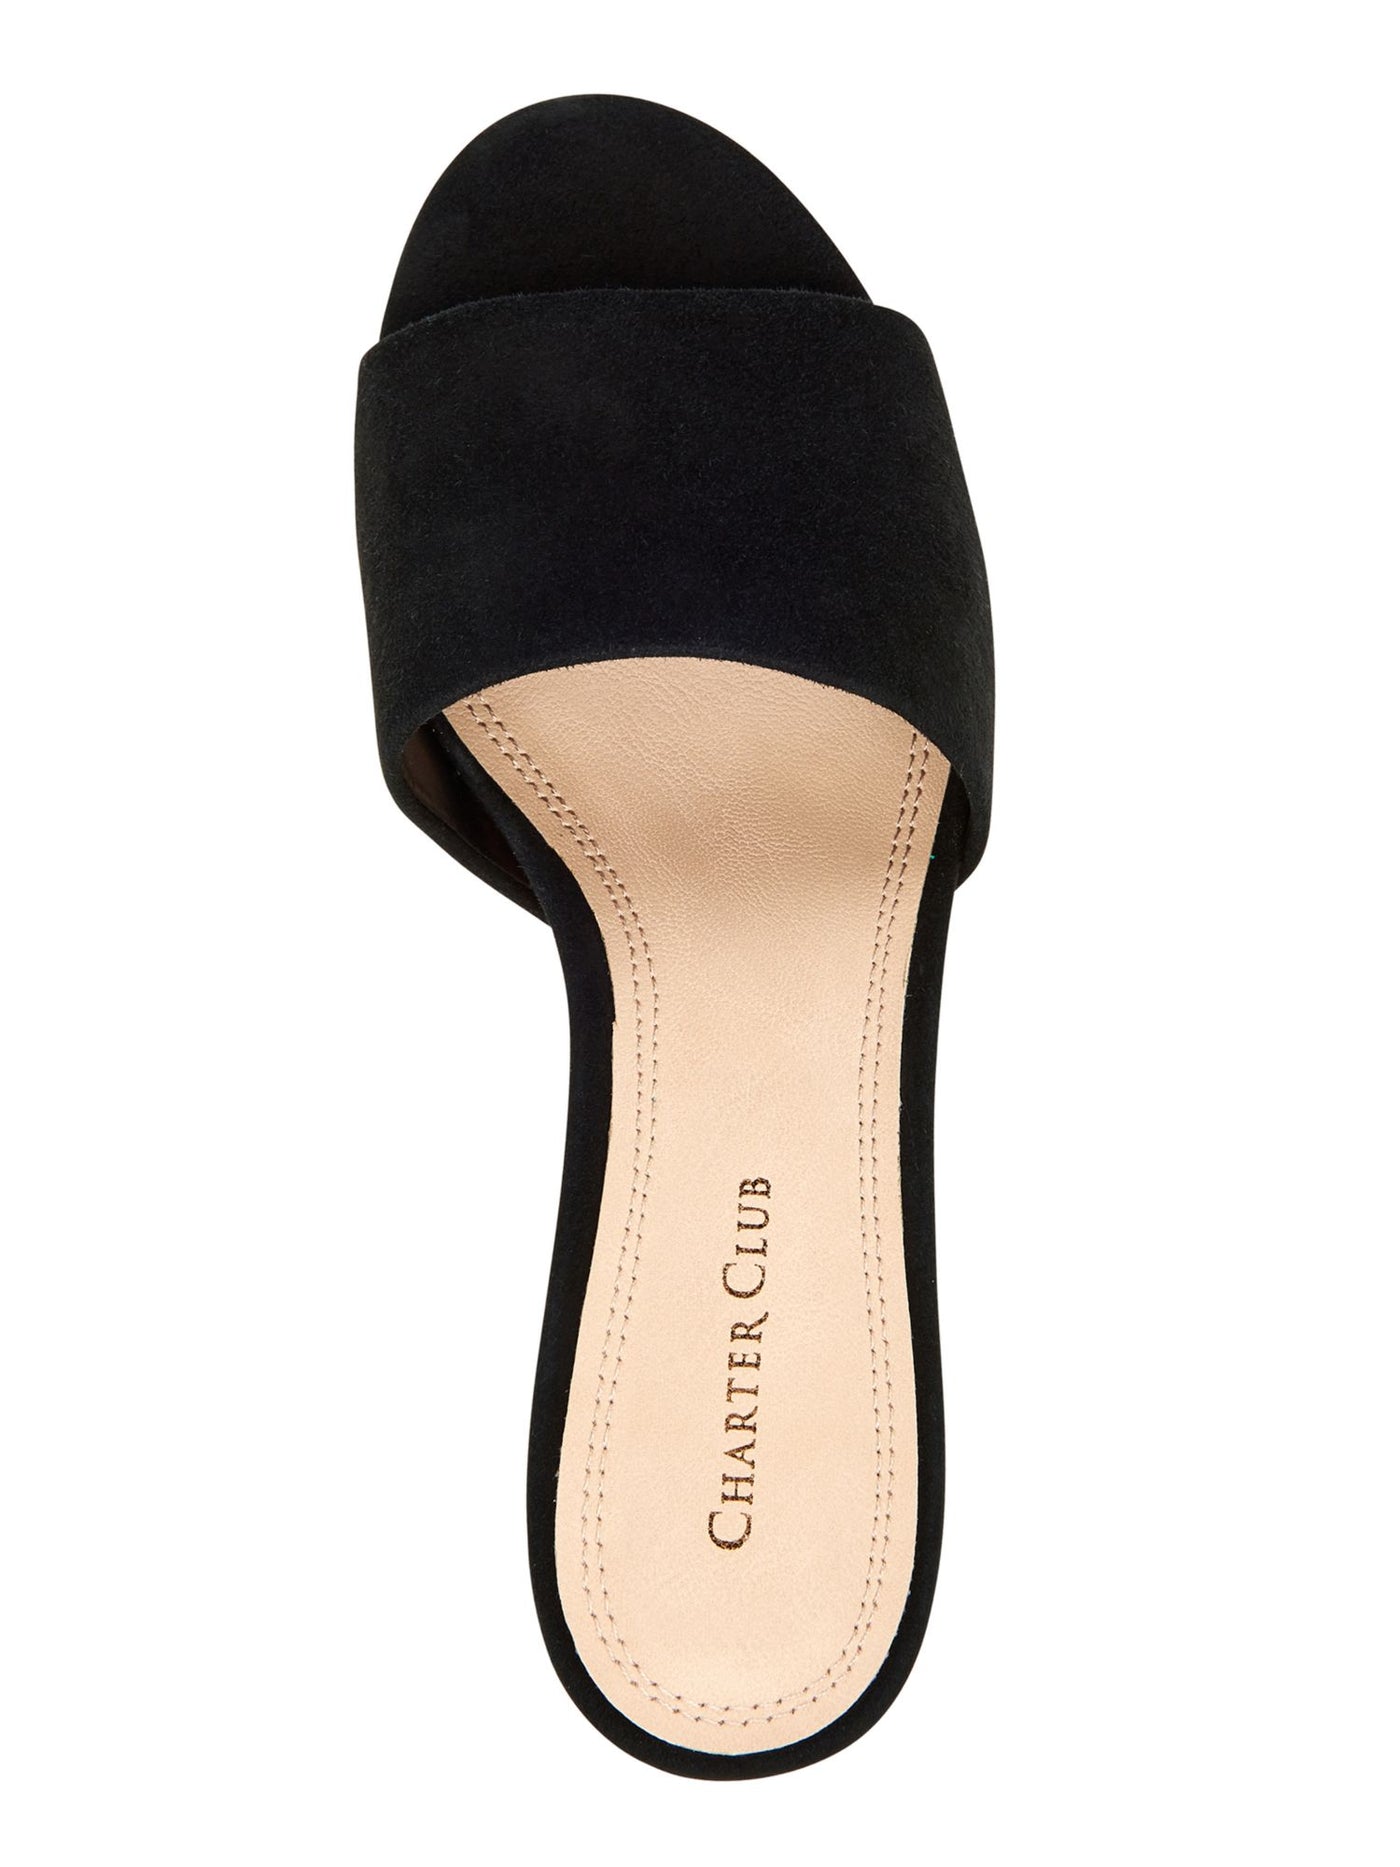 CHARTER CLUB Womens Black Cork Wedge Cushioned Nallahh Almond Toe Wedge Slip On Sandals Shoes 9 M